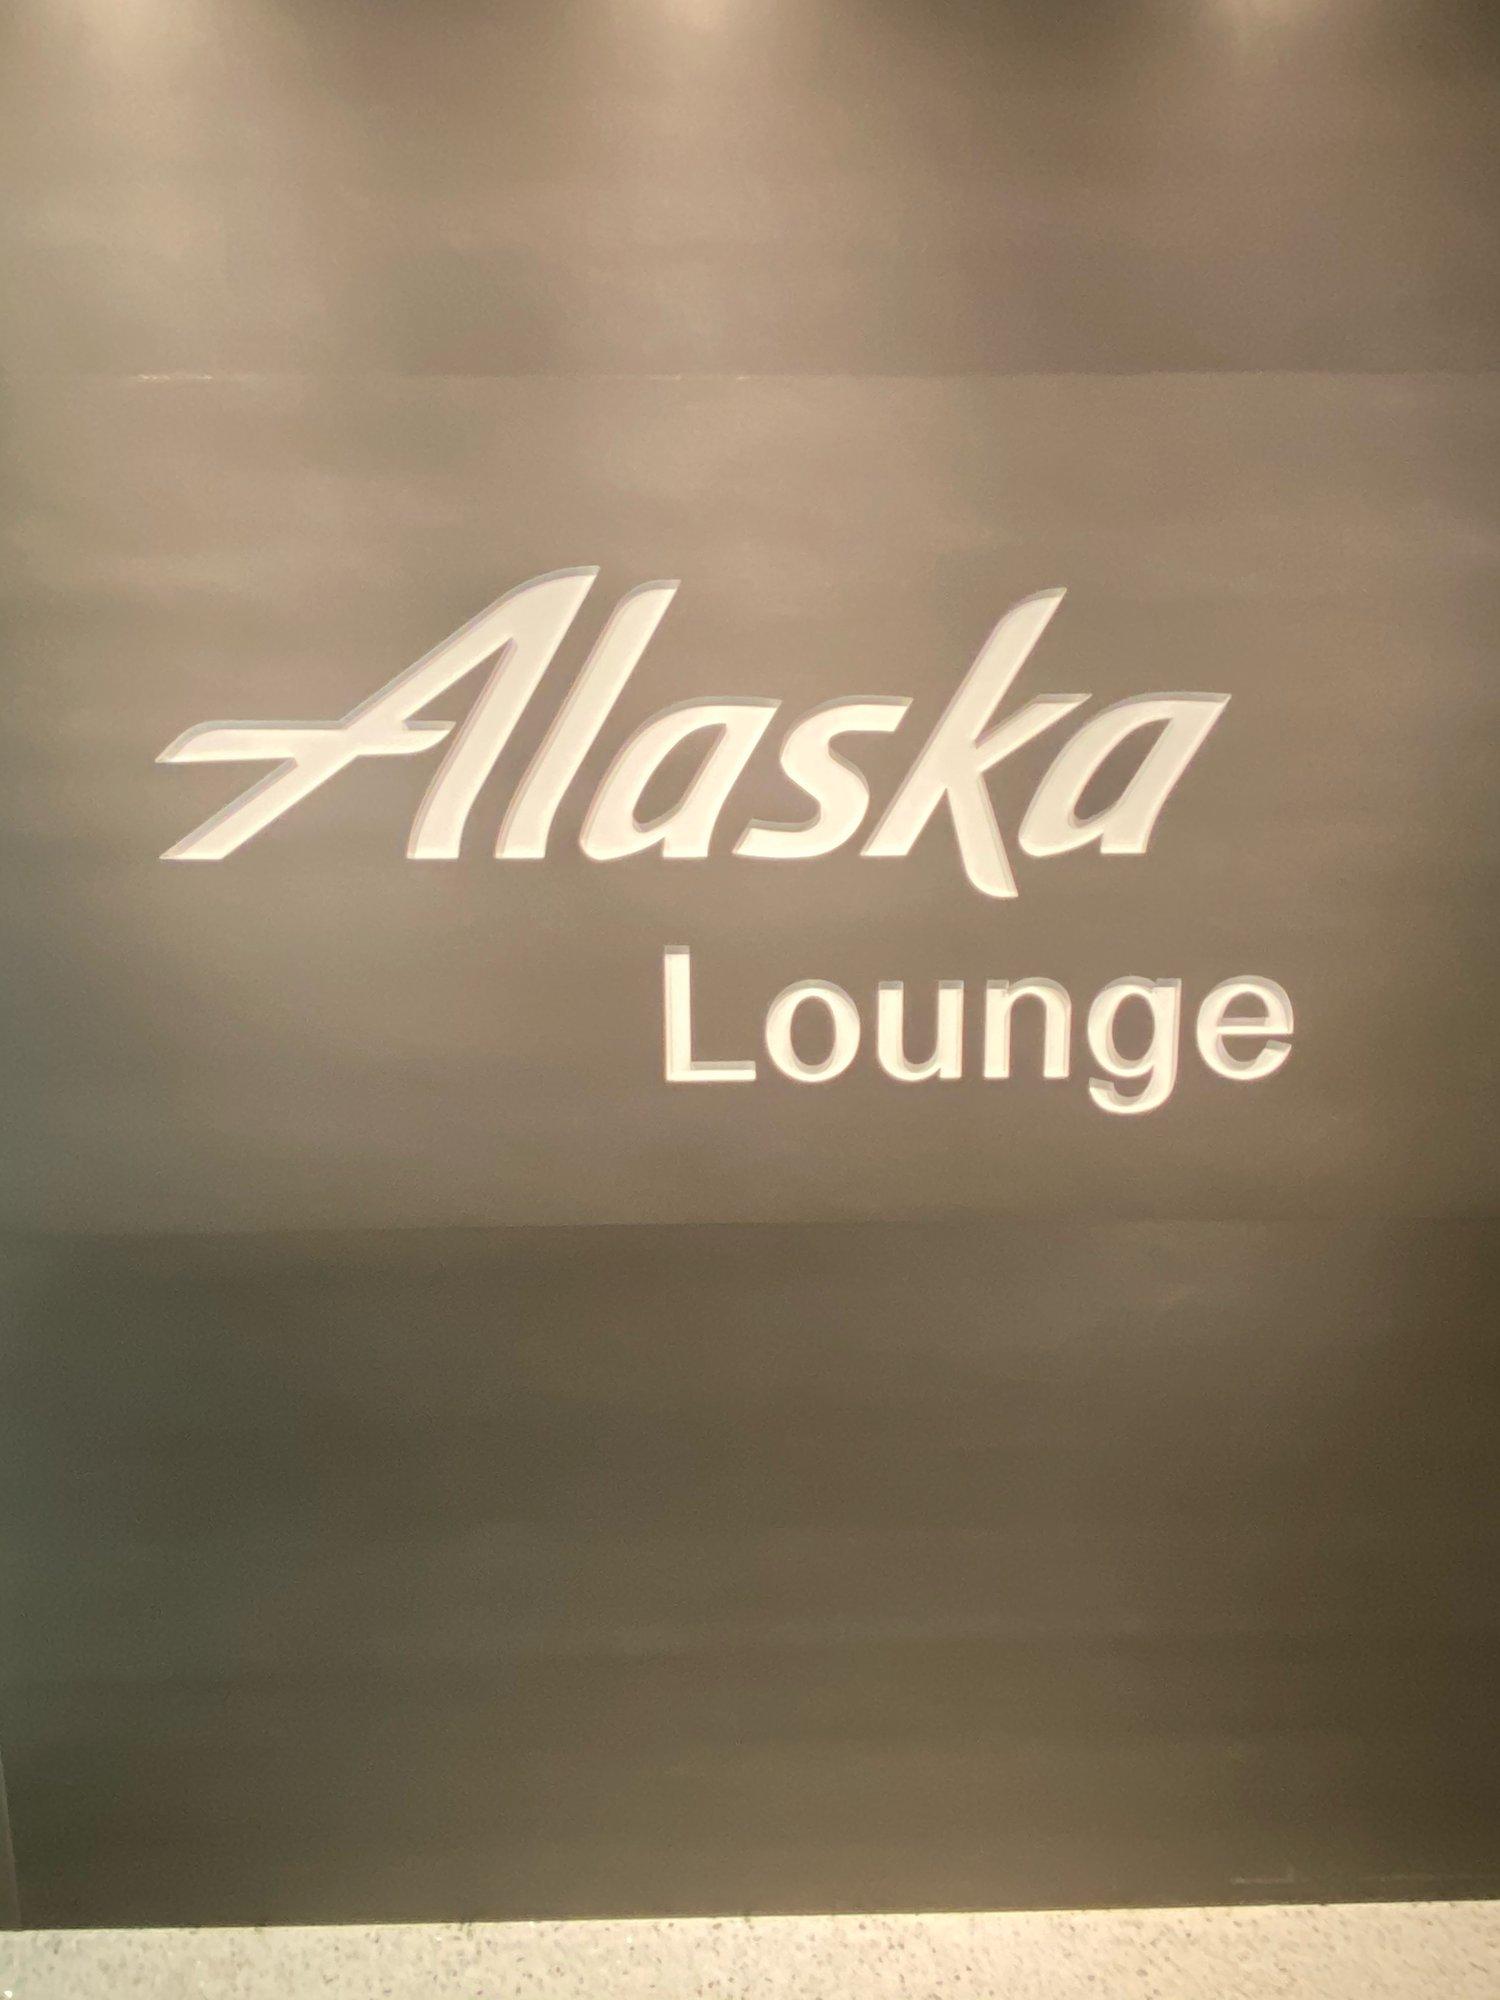 Alaska Airlines Alaska Lounge image 1 of 12